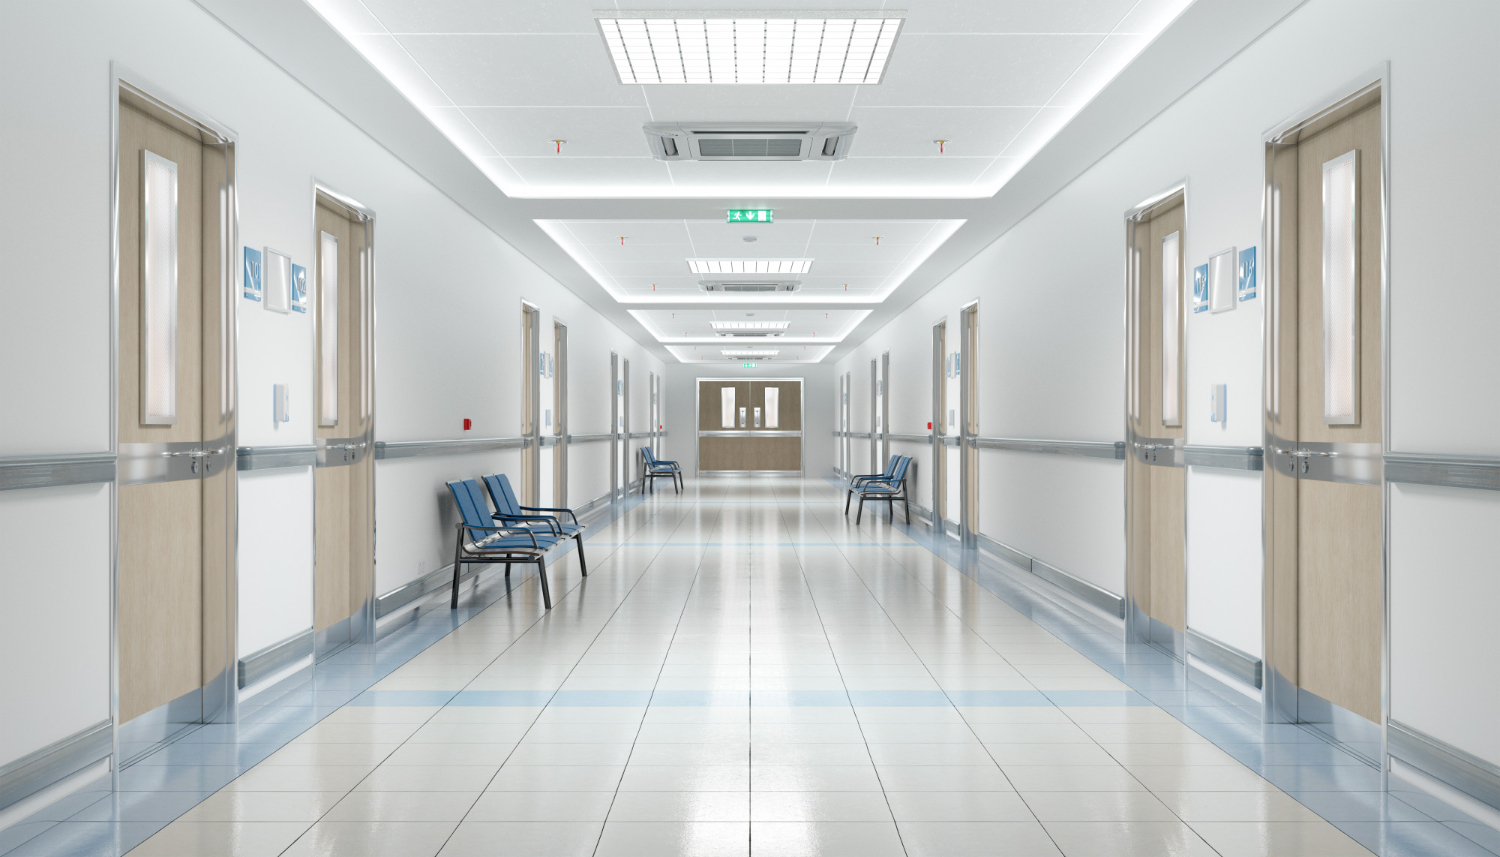 long-hospital-corridor-with-empty-seats